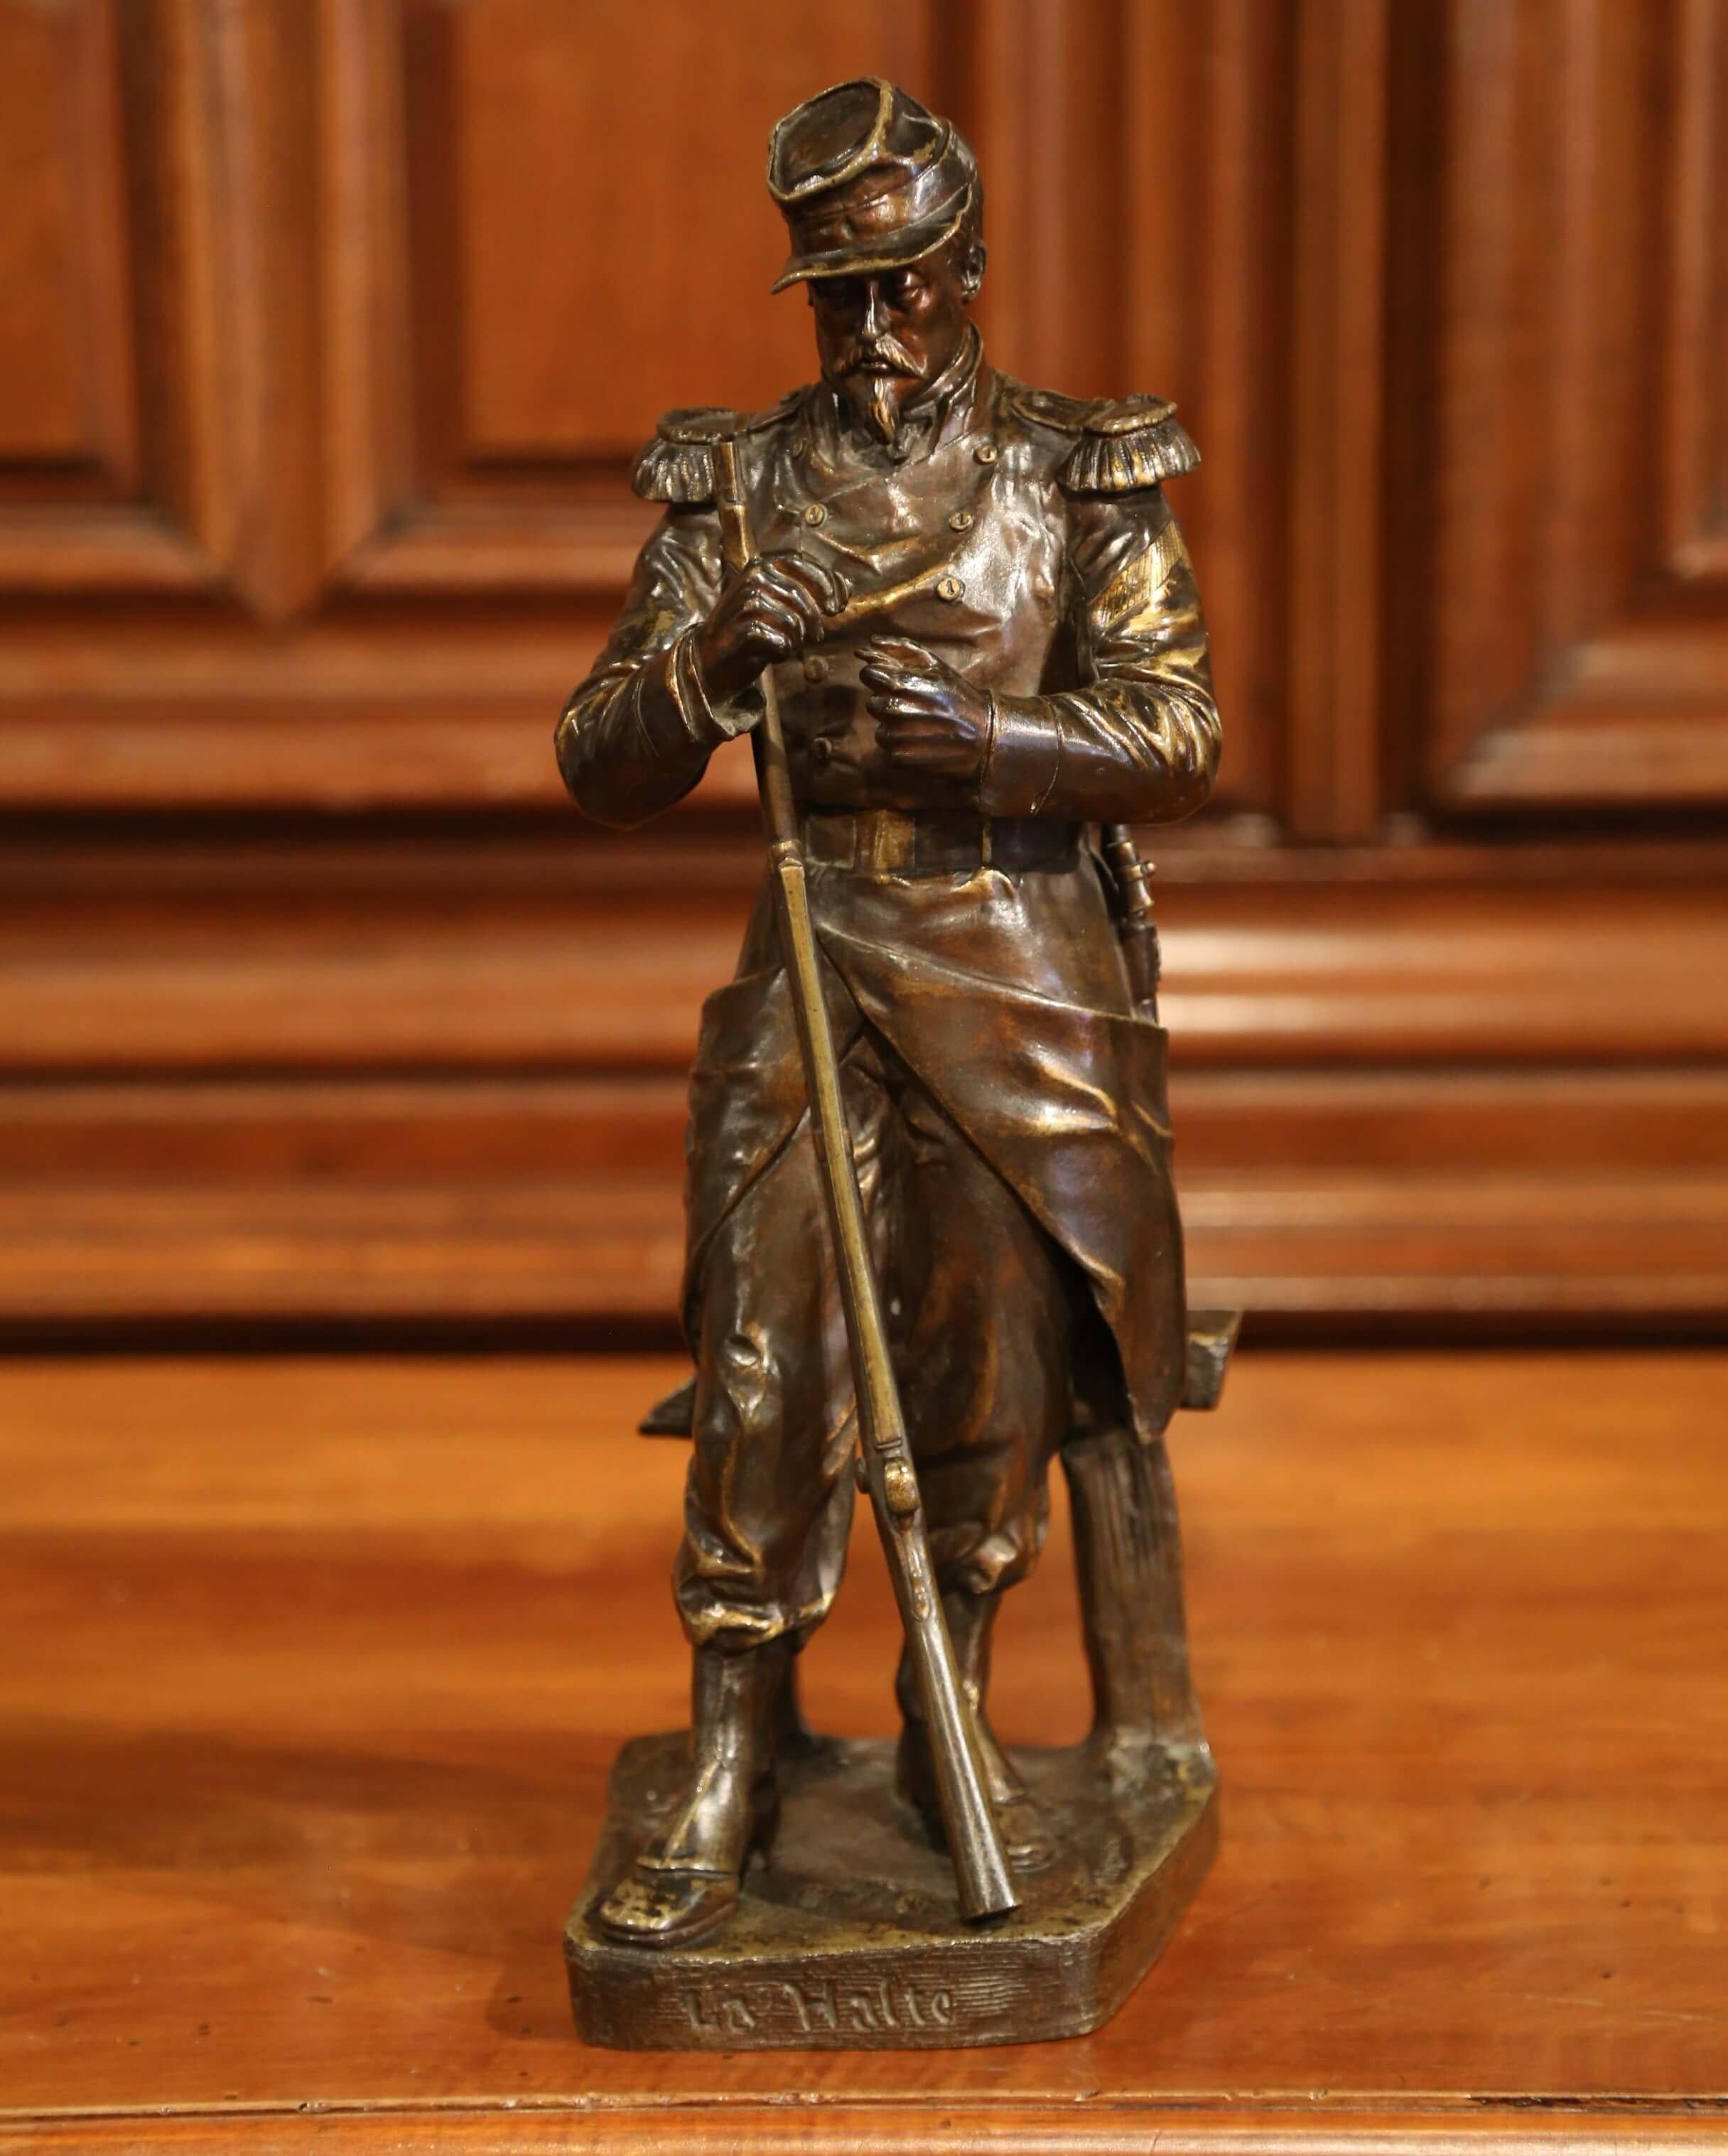 19th Century French Patinated Bronze Sculpture “La Halte” Signed L. Mennessier For Sale 1